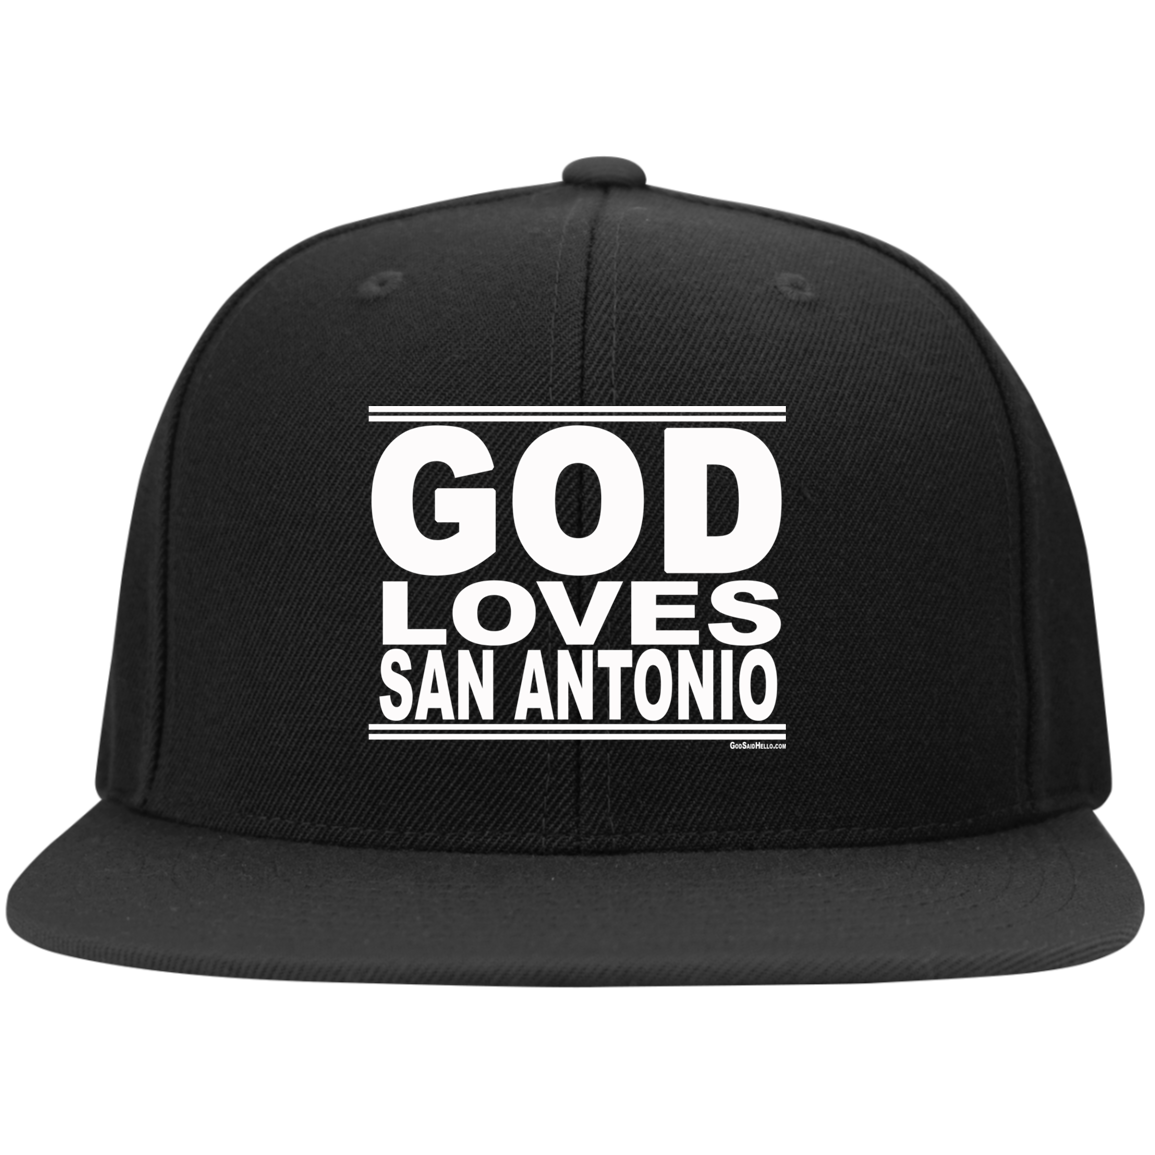 #GodLovesSanAntonio - Snapback Hat